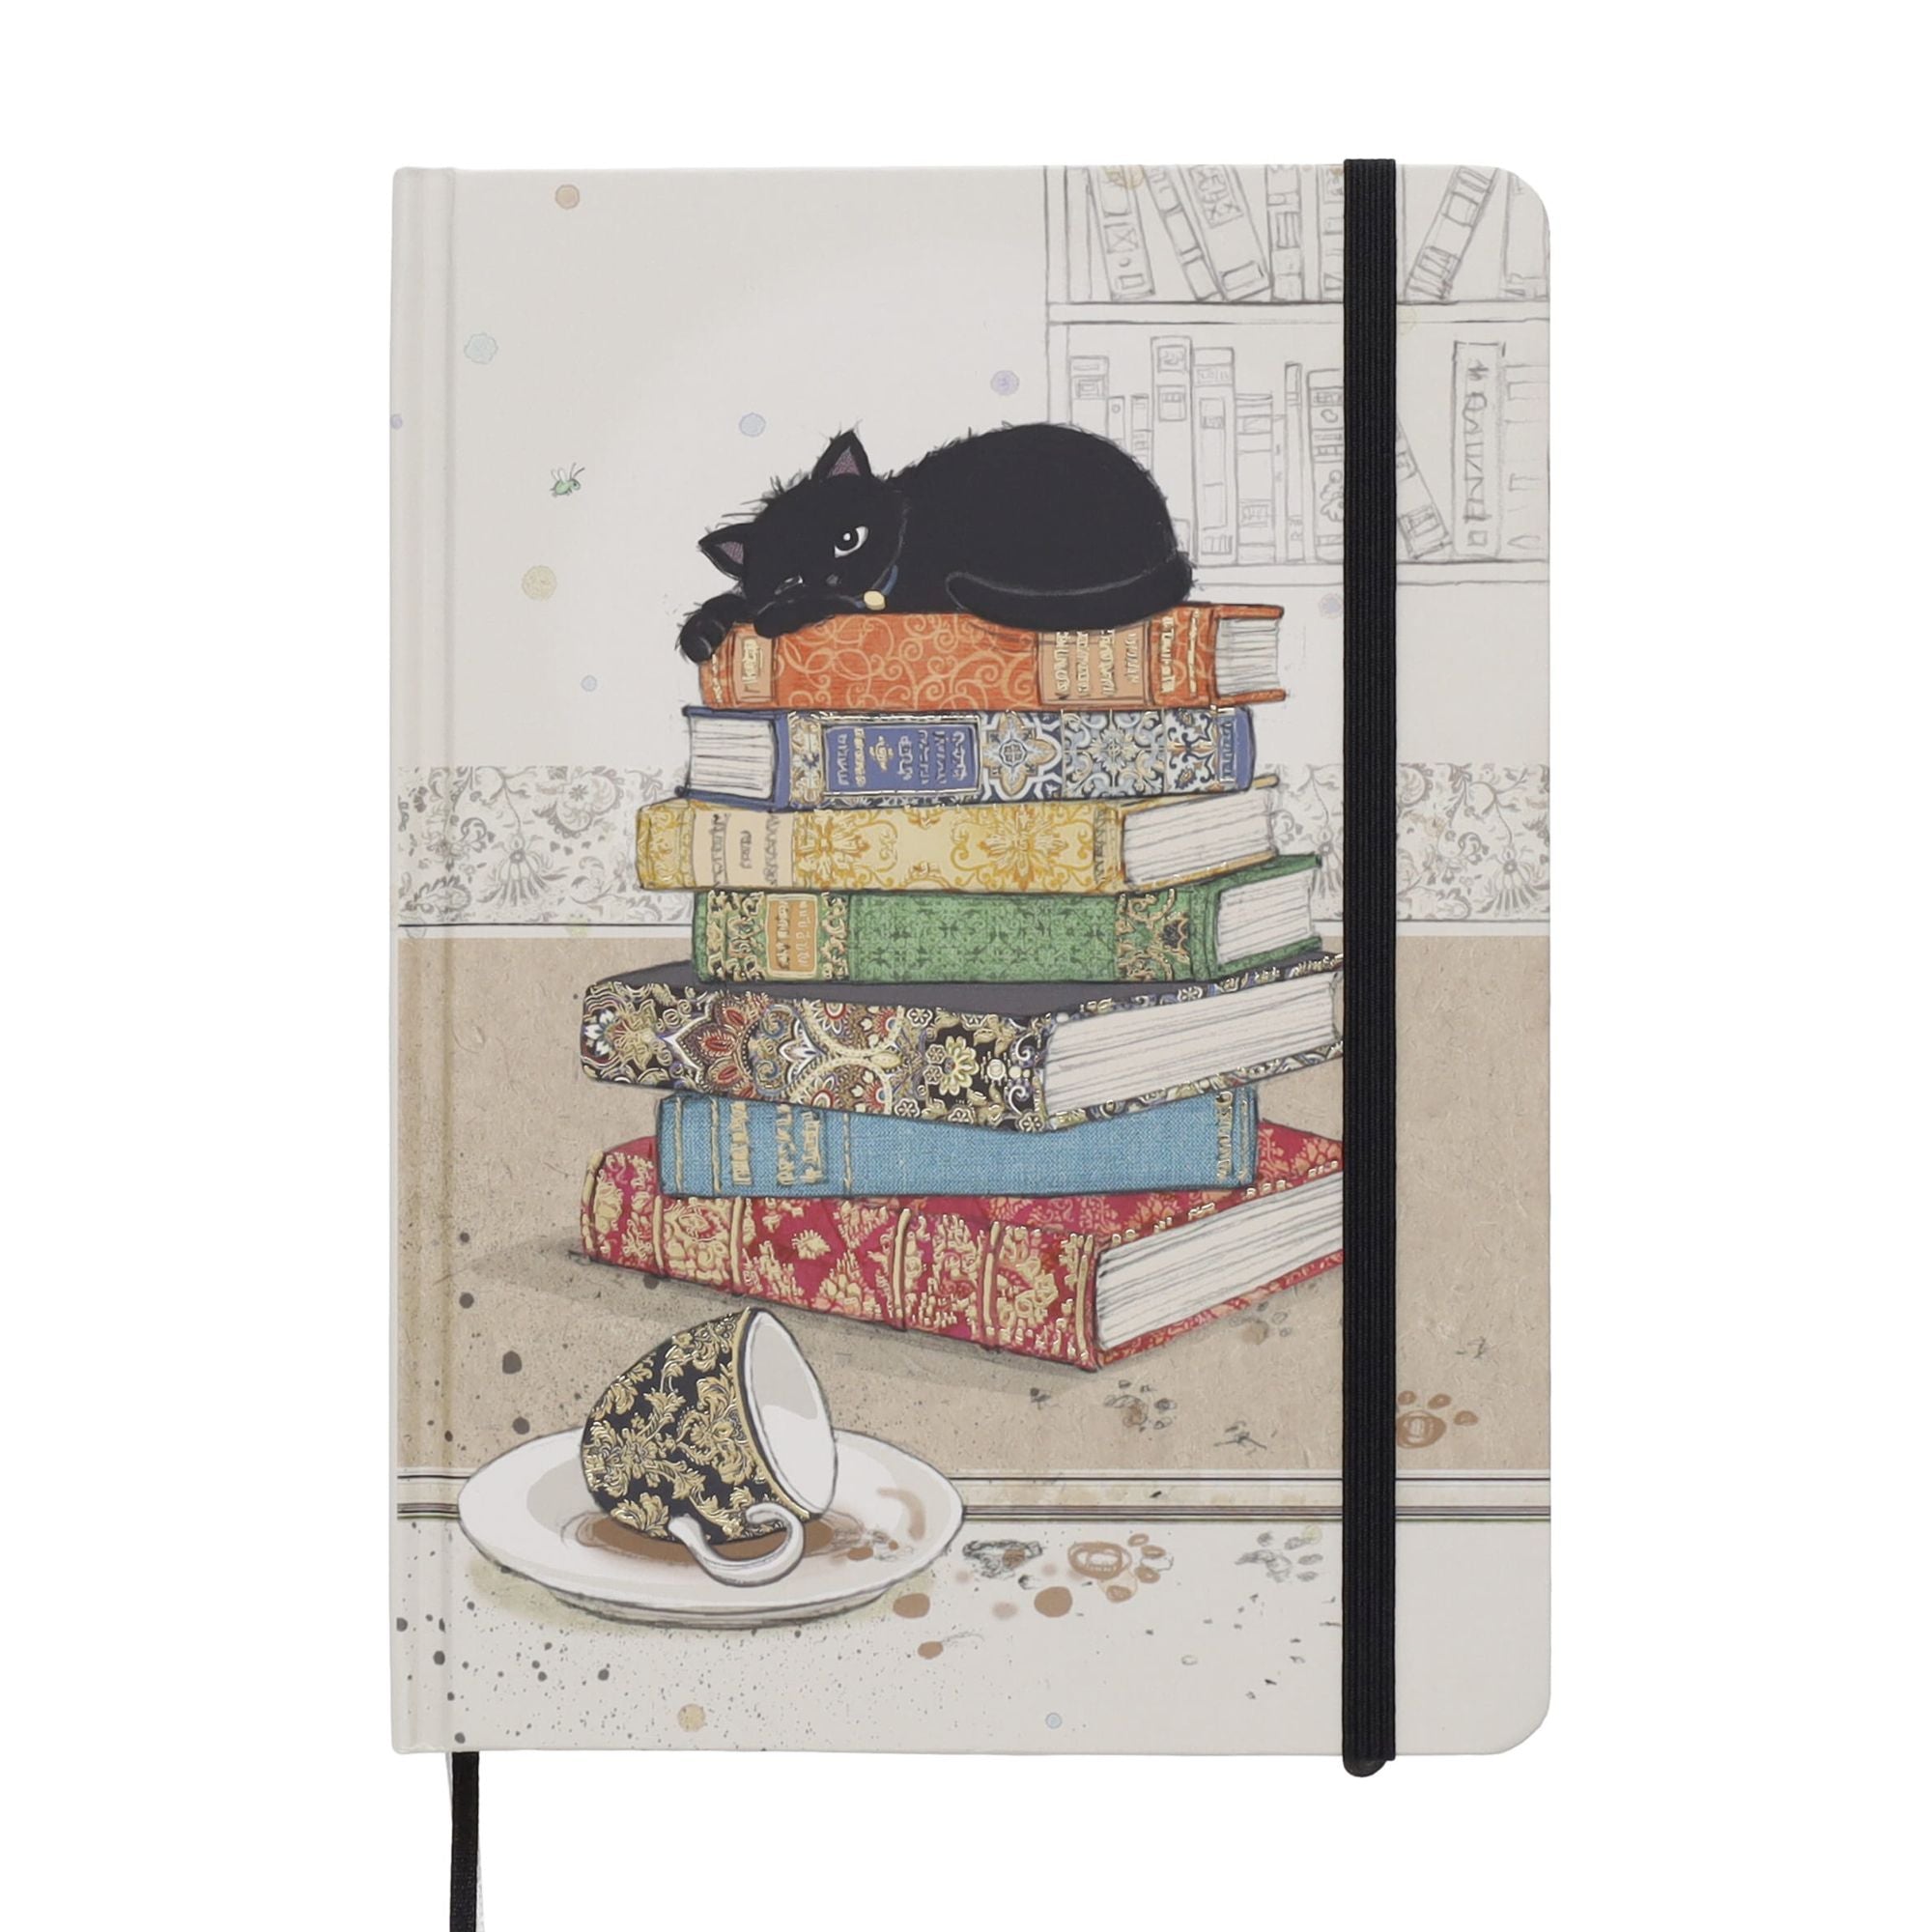 Black Kitty A5 Notebook